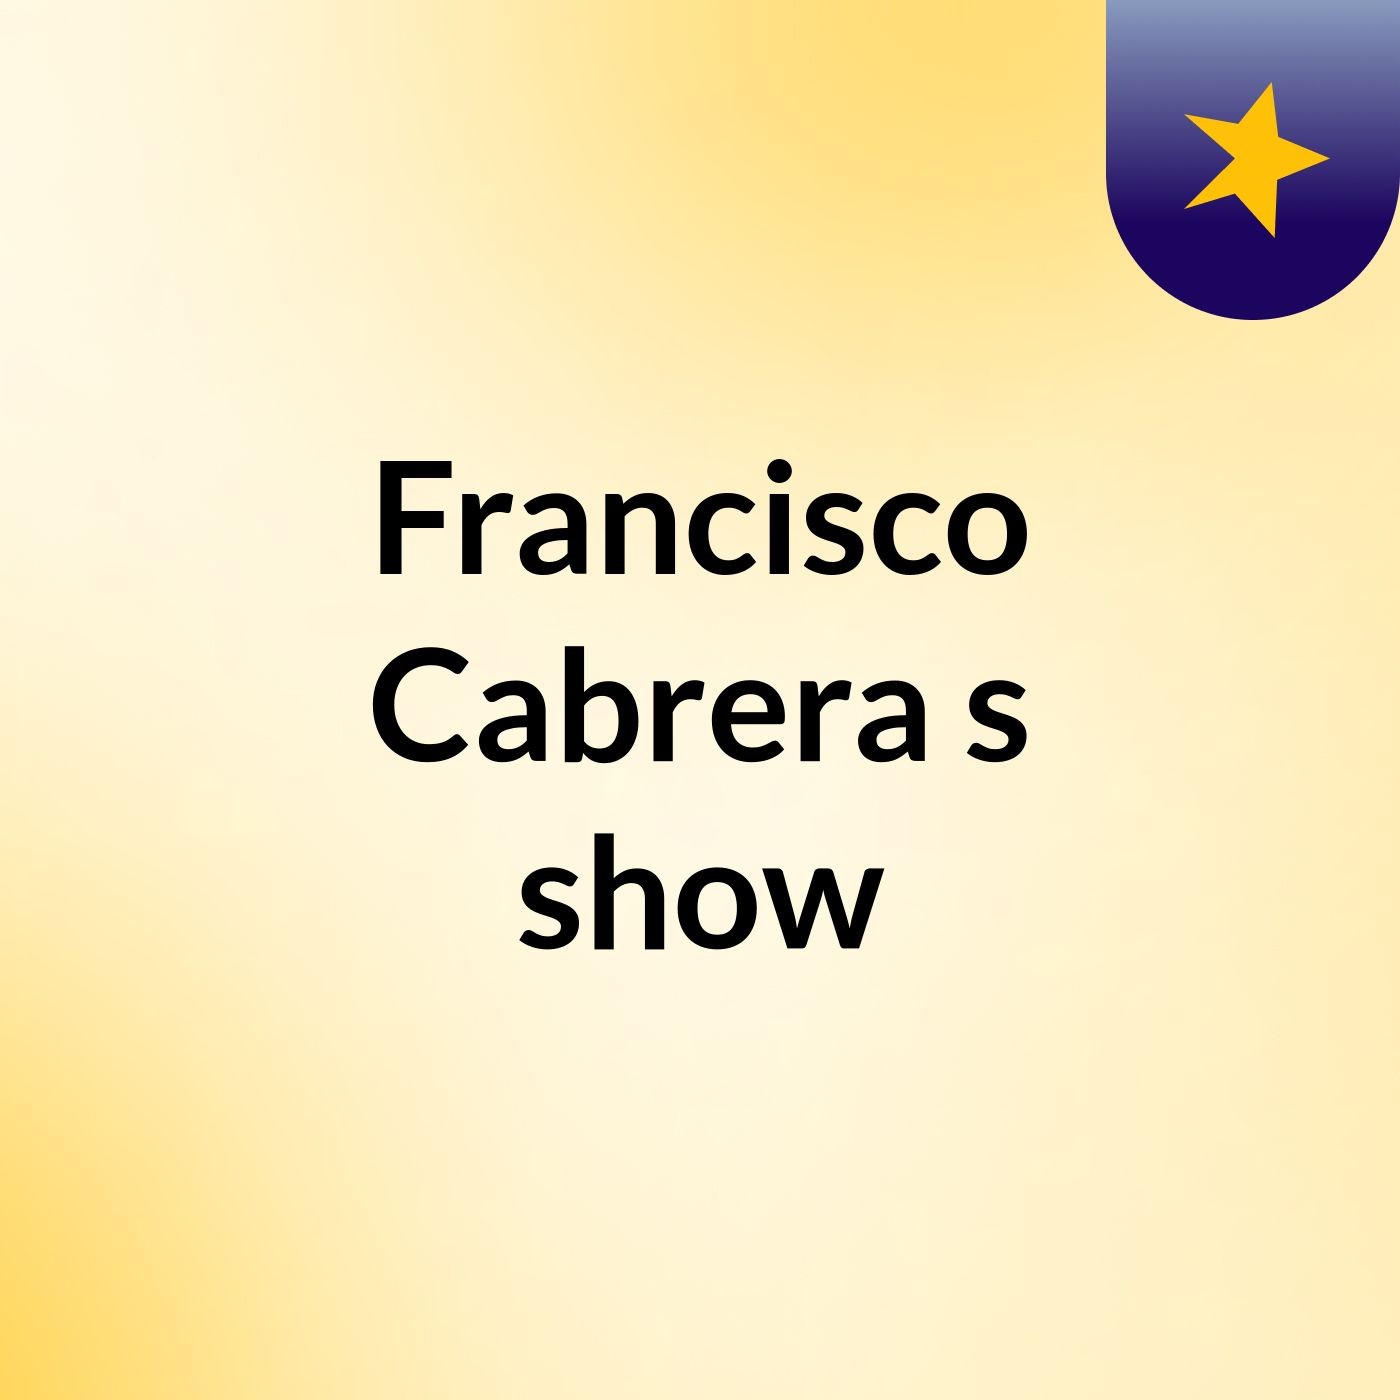 Francisco Cabrera's show